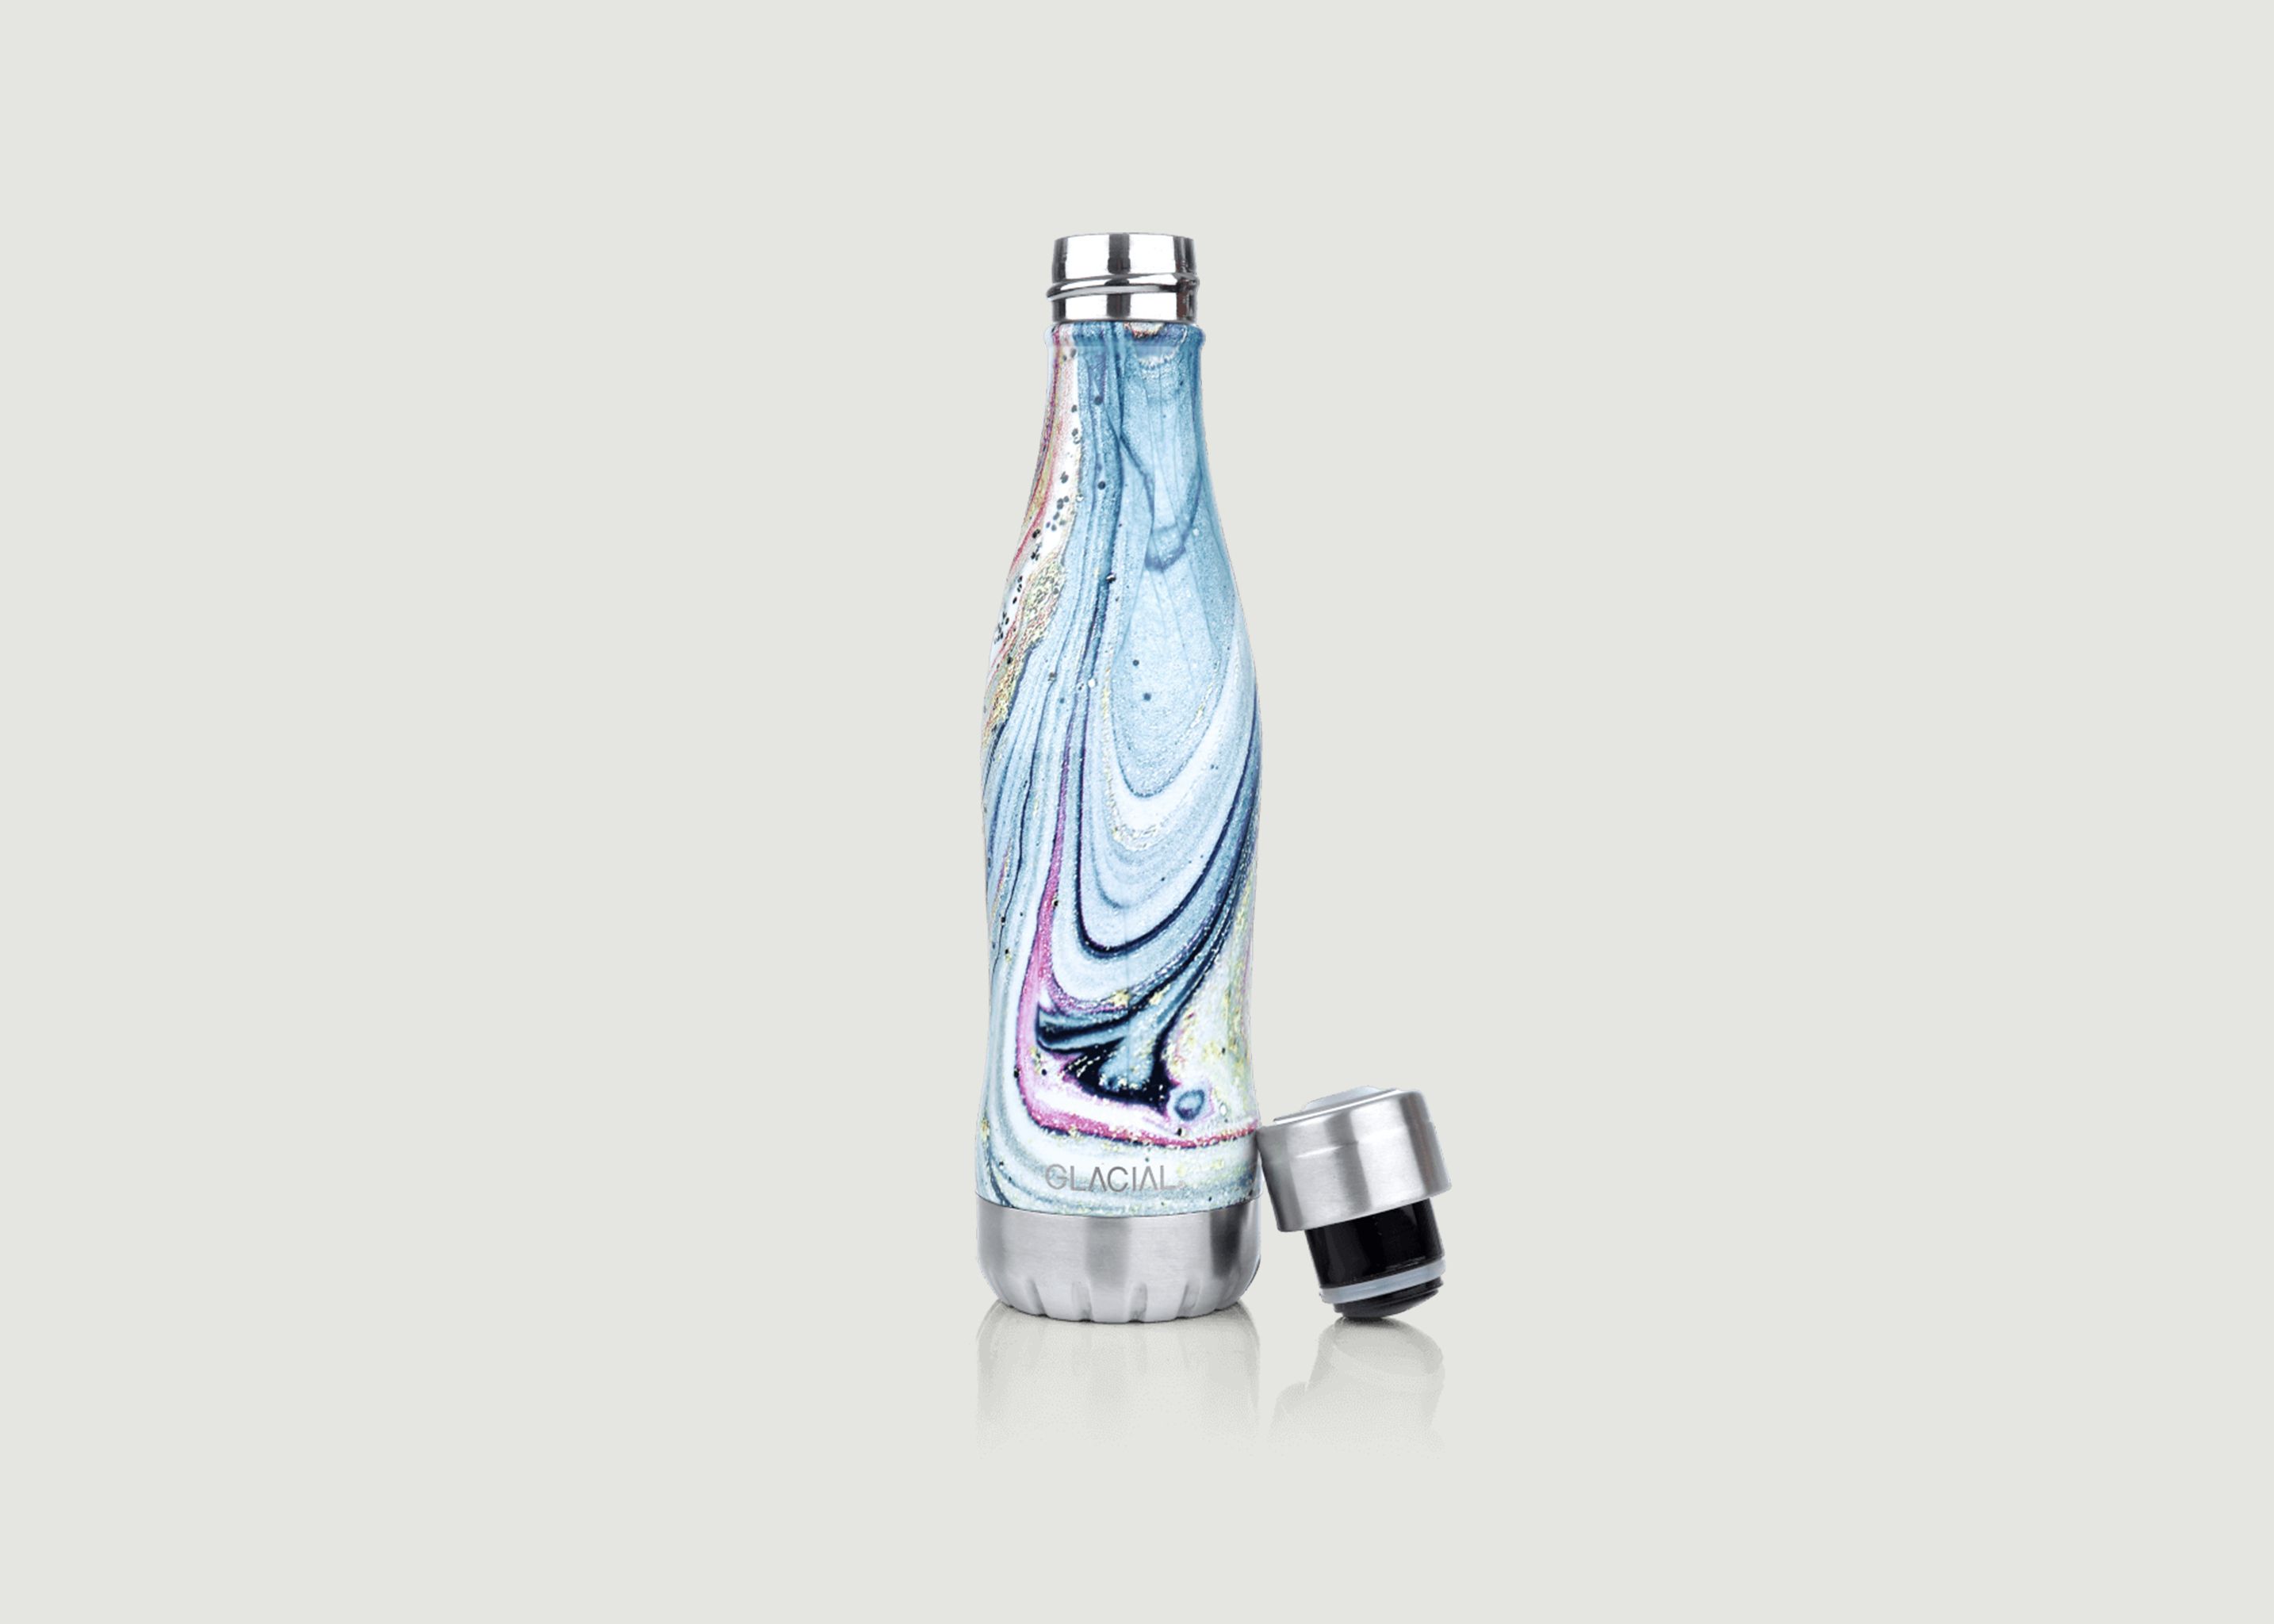 Fantasy stainless steel bottle - Glacial